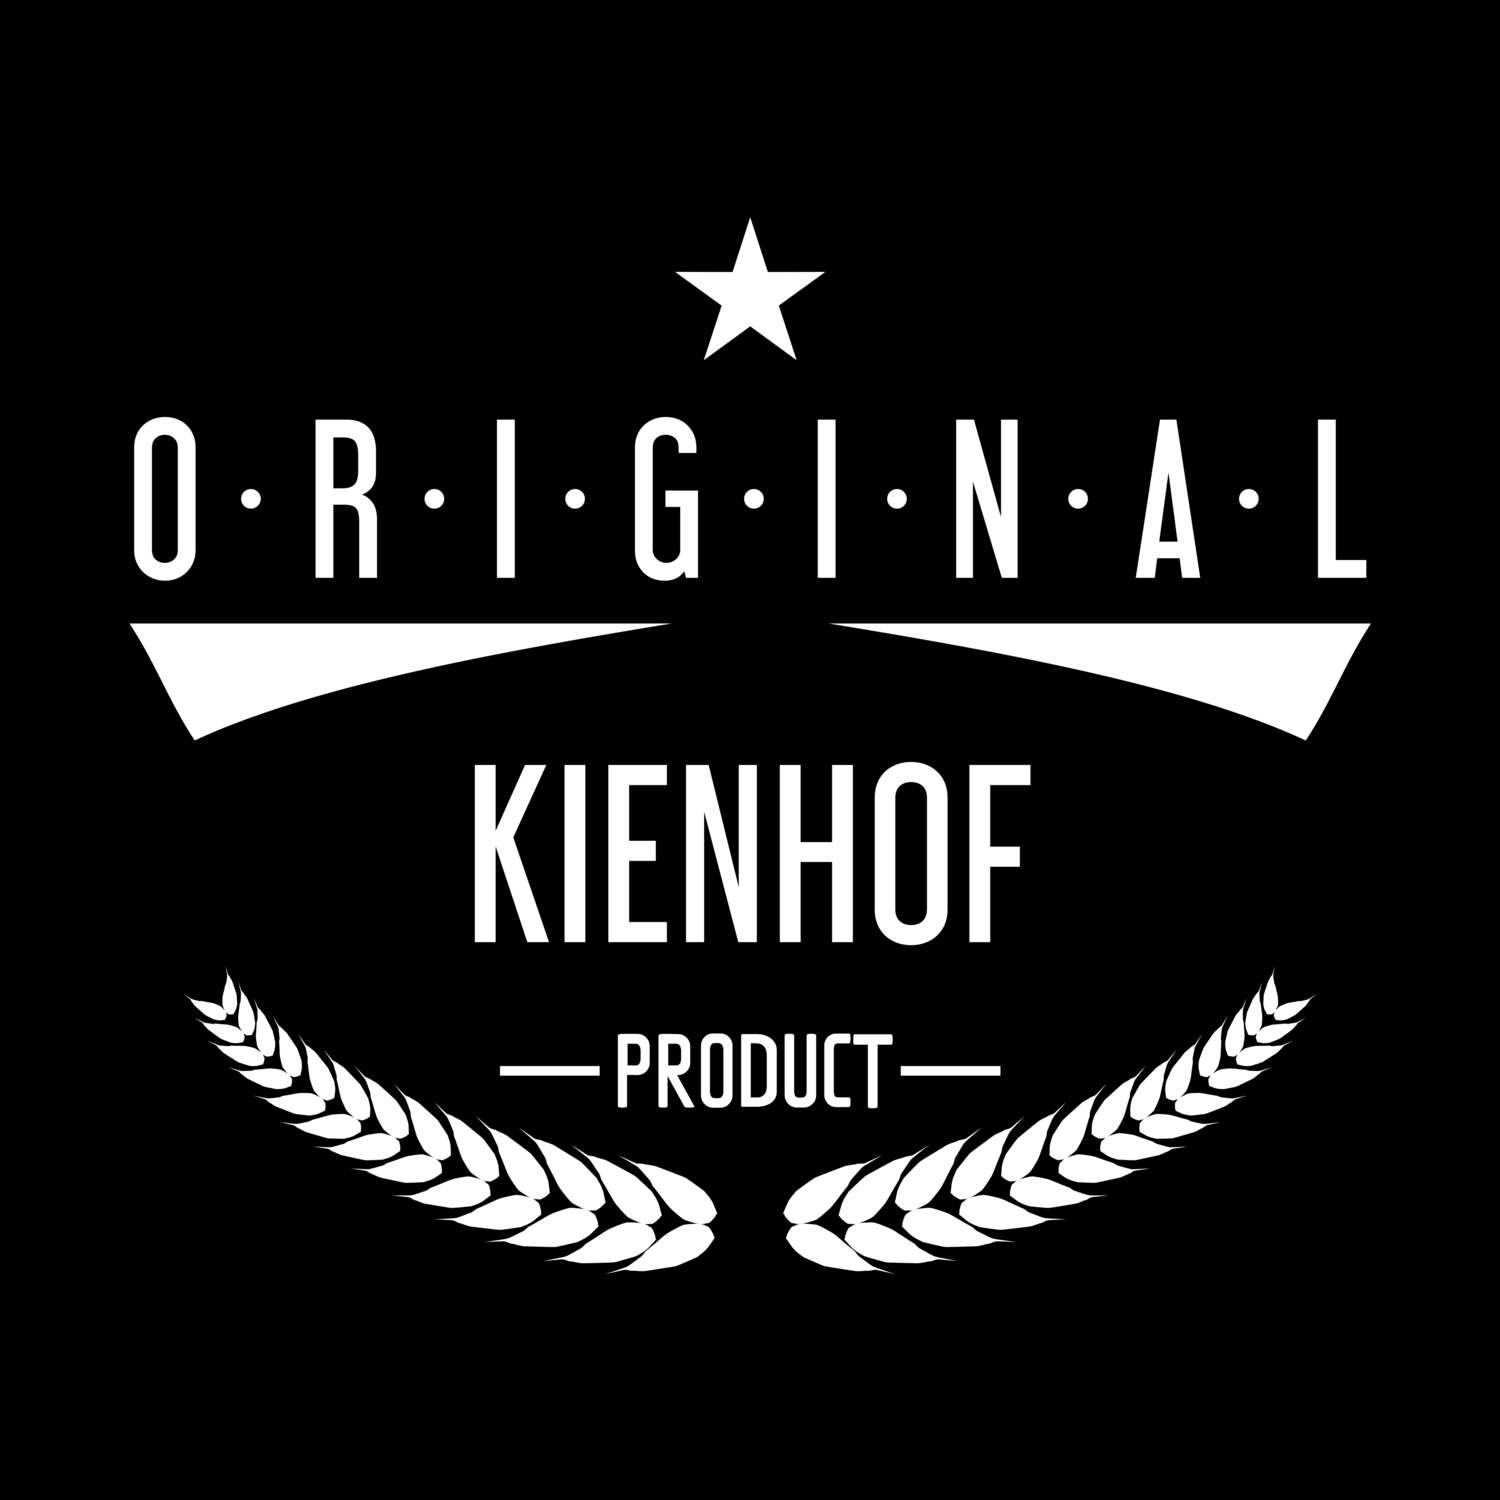 Kienhof T-Shirt »Original Product«